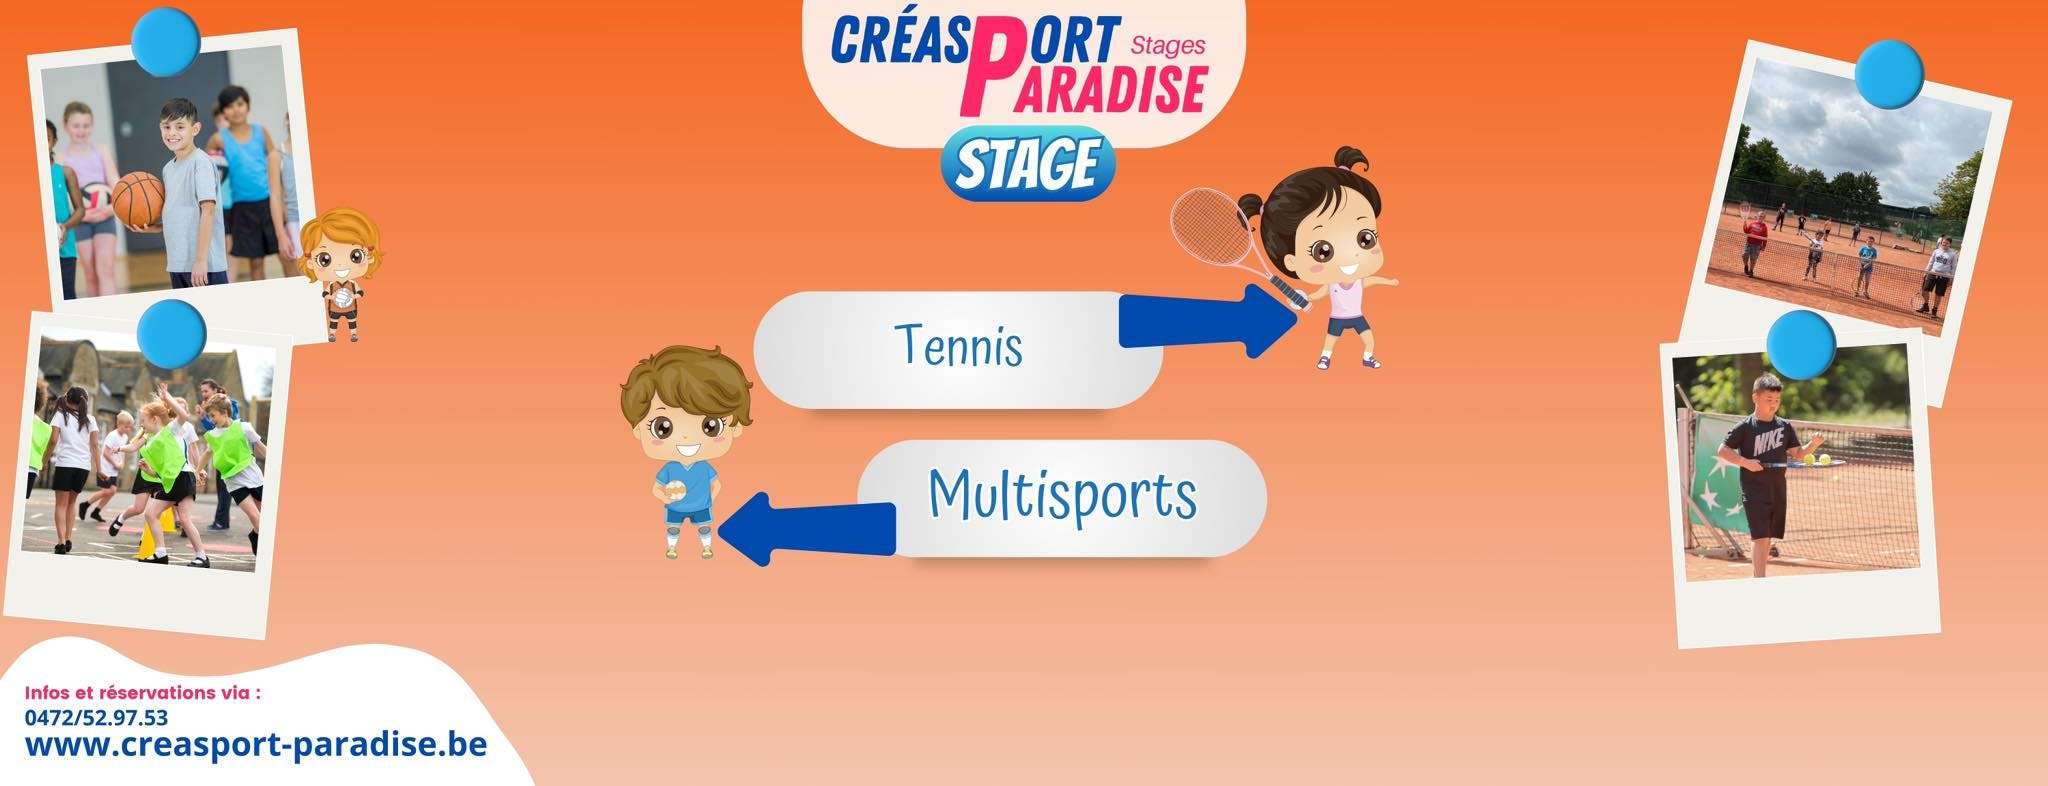 Tennis - Multisports